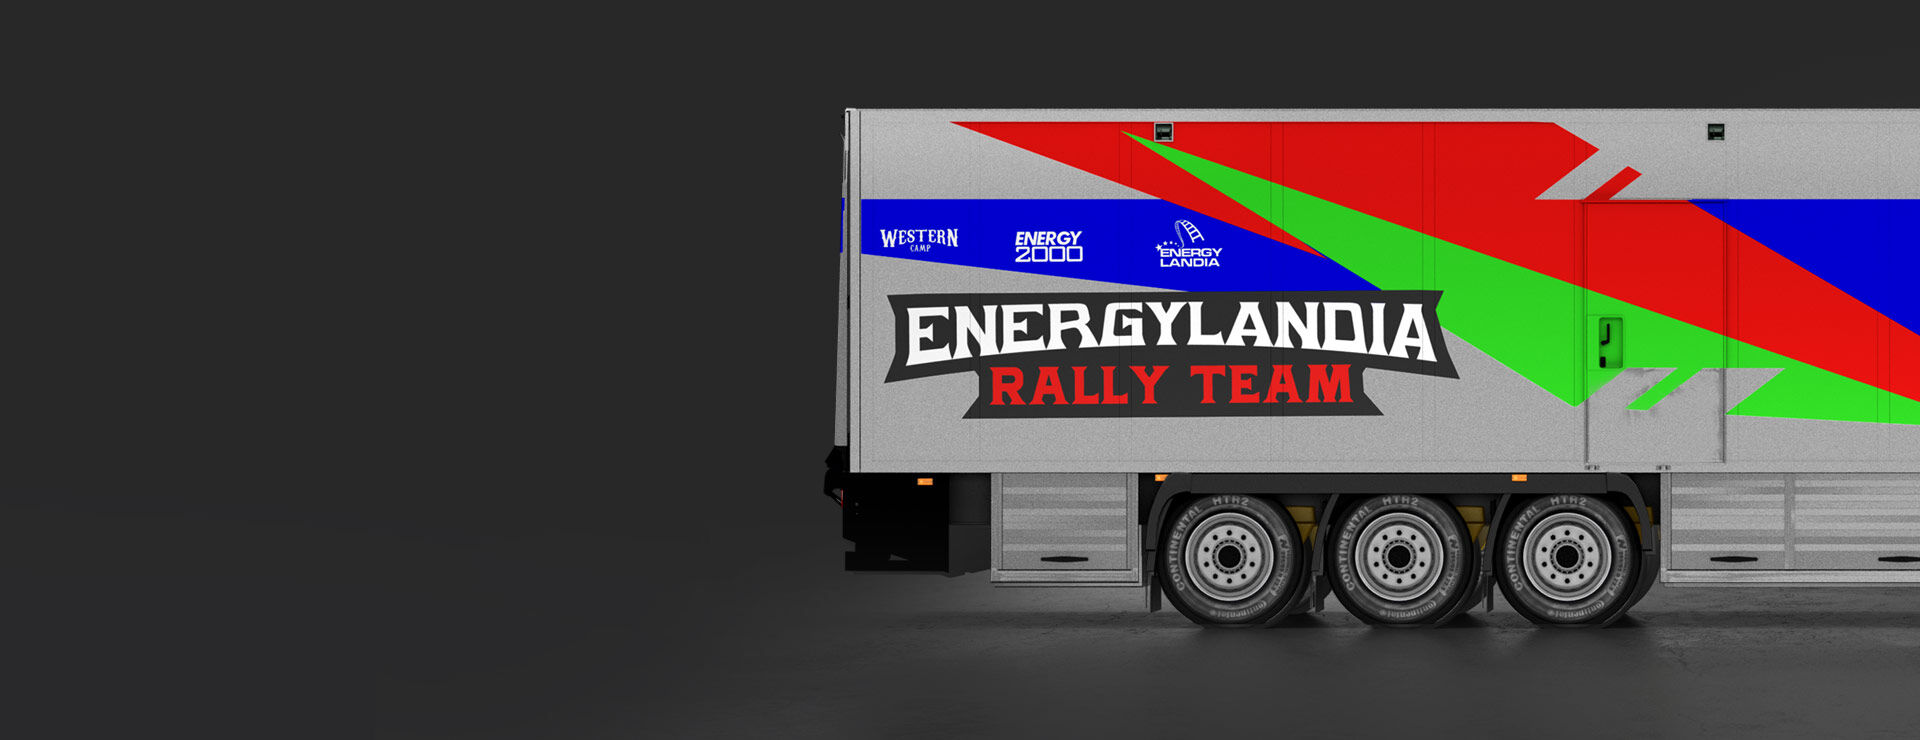 Energylandia Rally Team